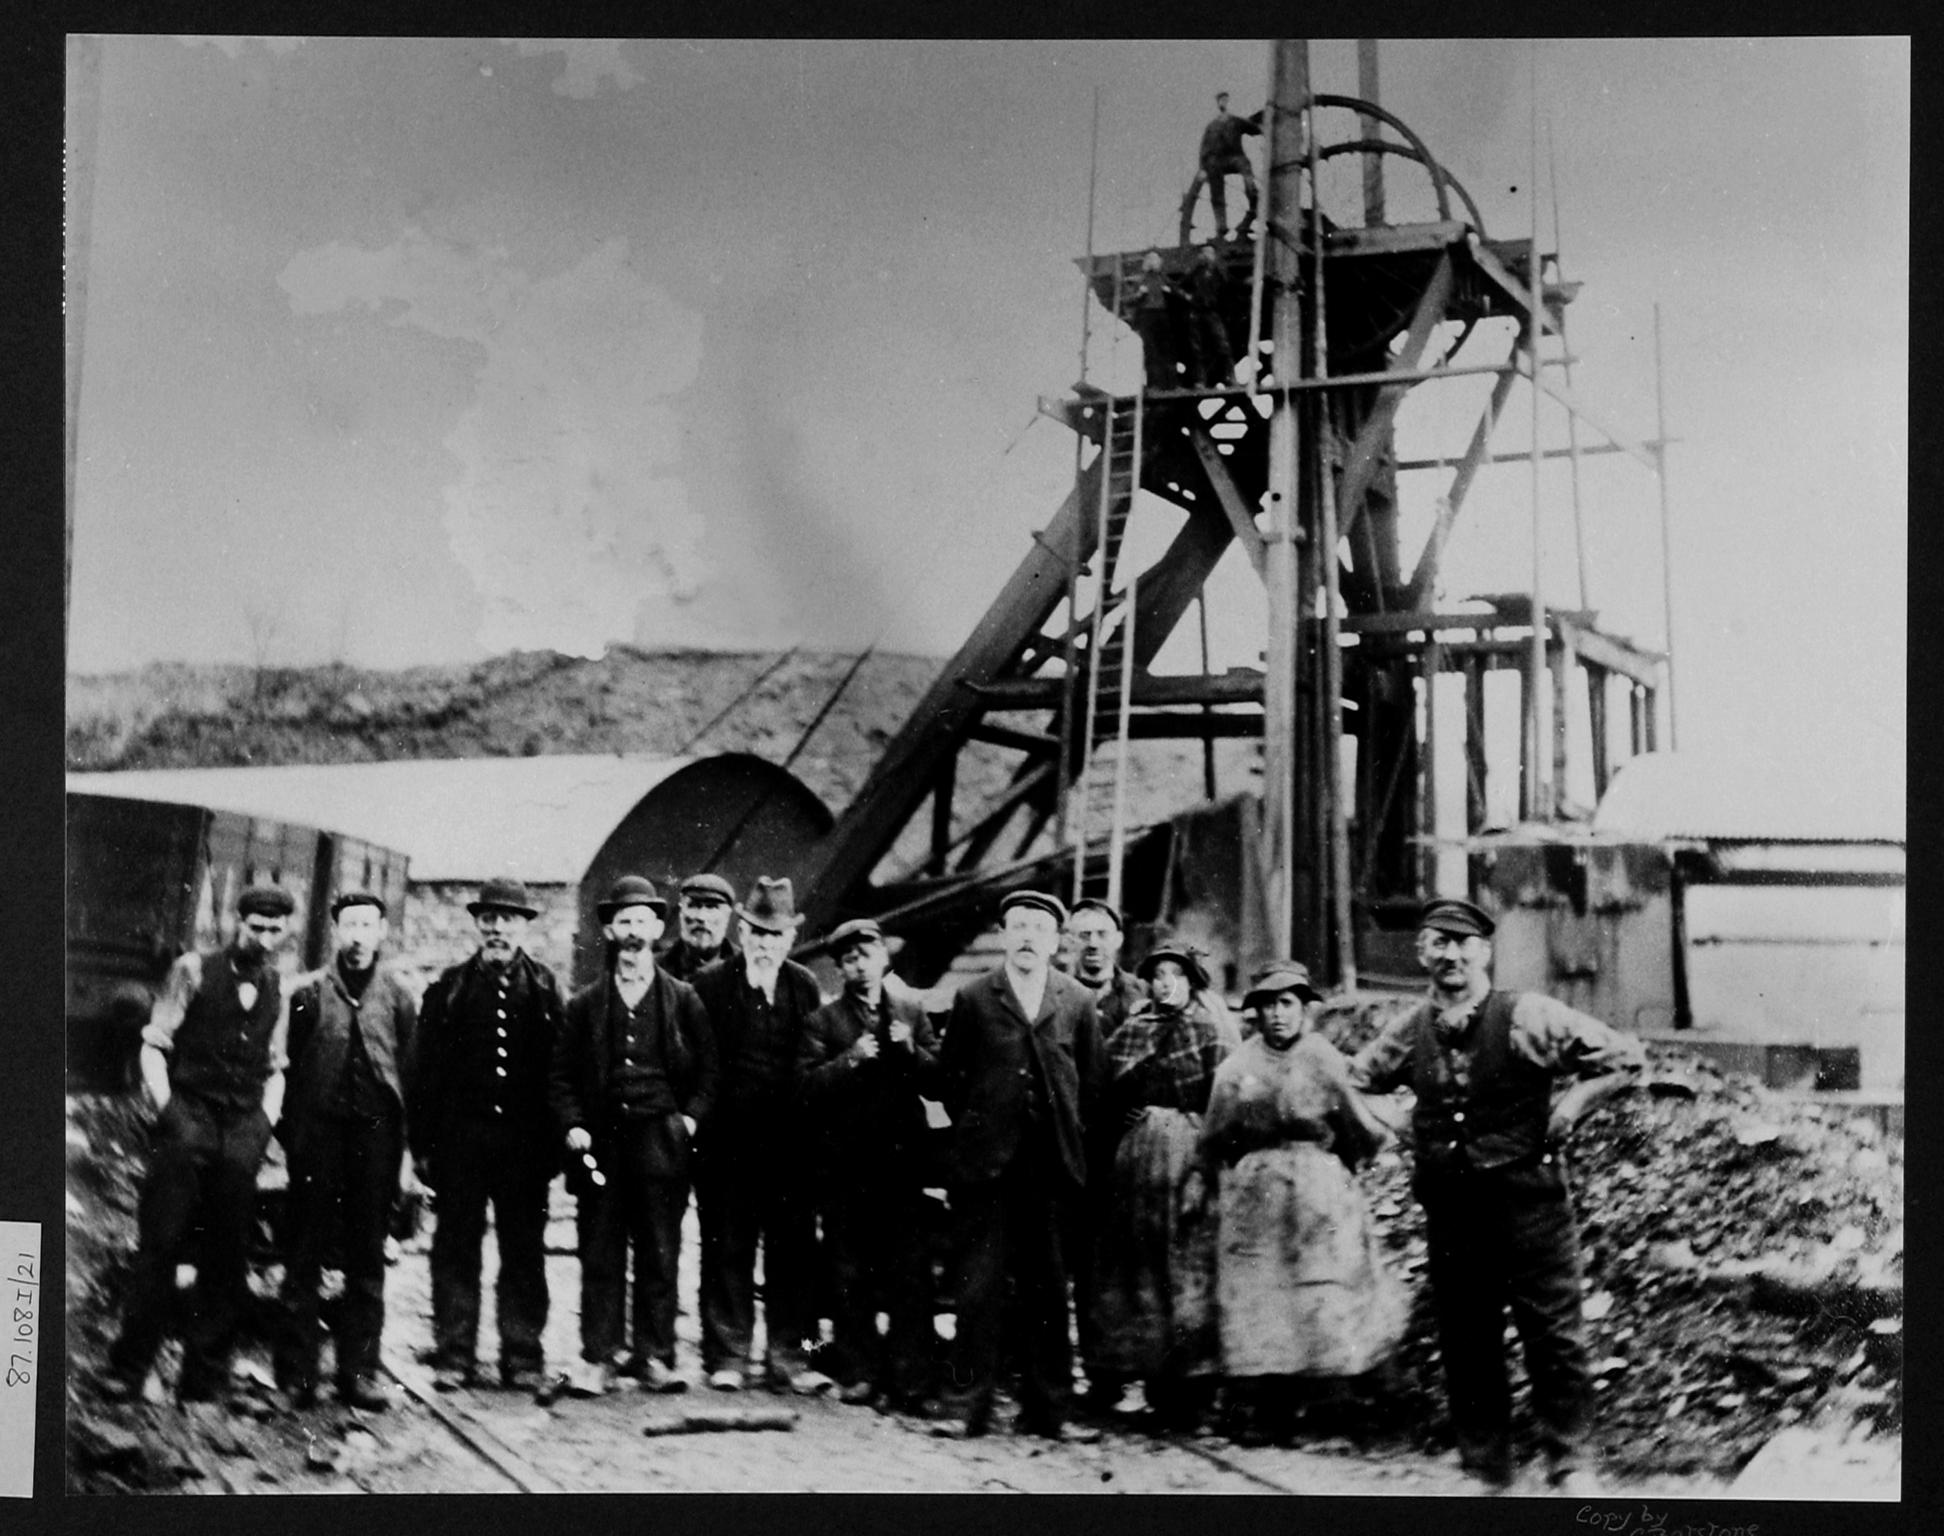 Abernant Colliery, photograph